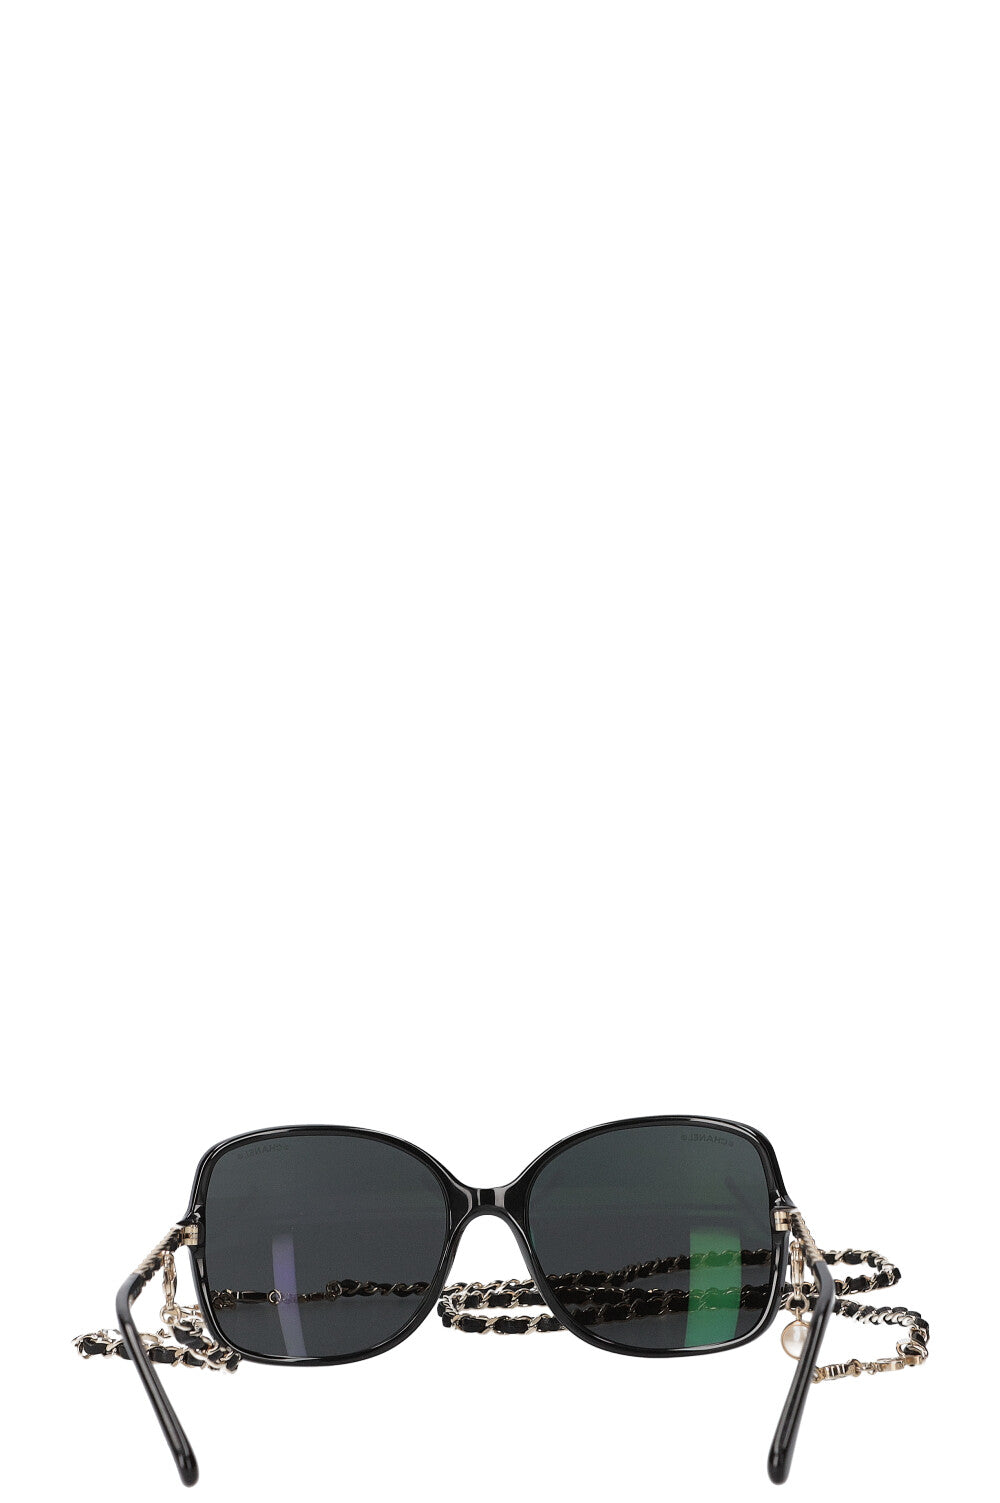 CHANEL Chain Sunglasses Black 5210Q